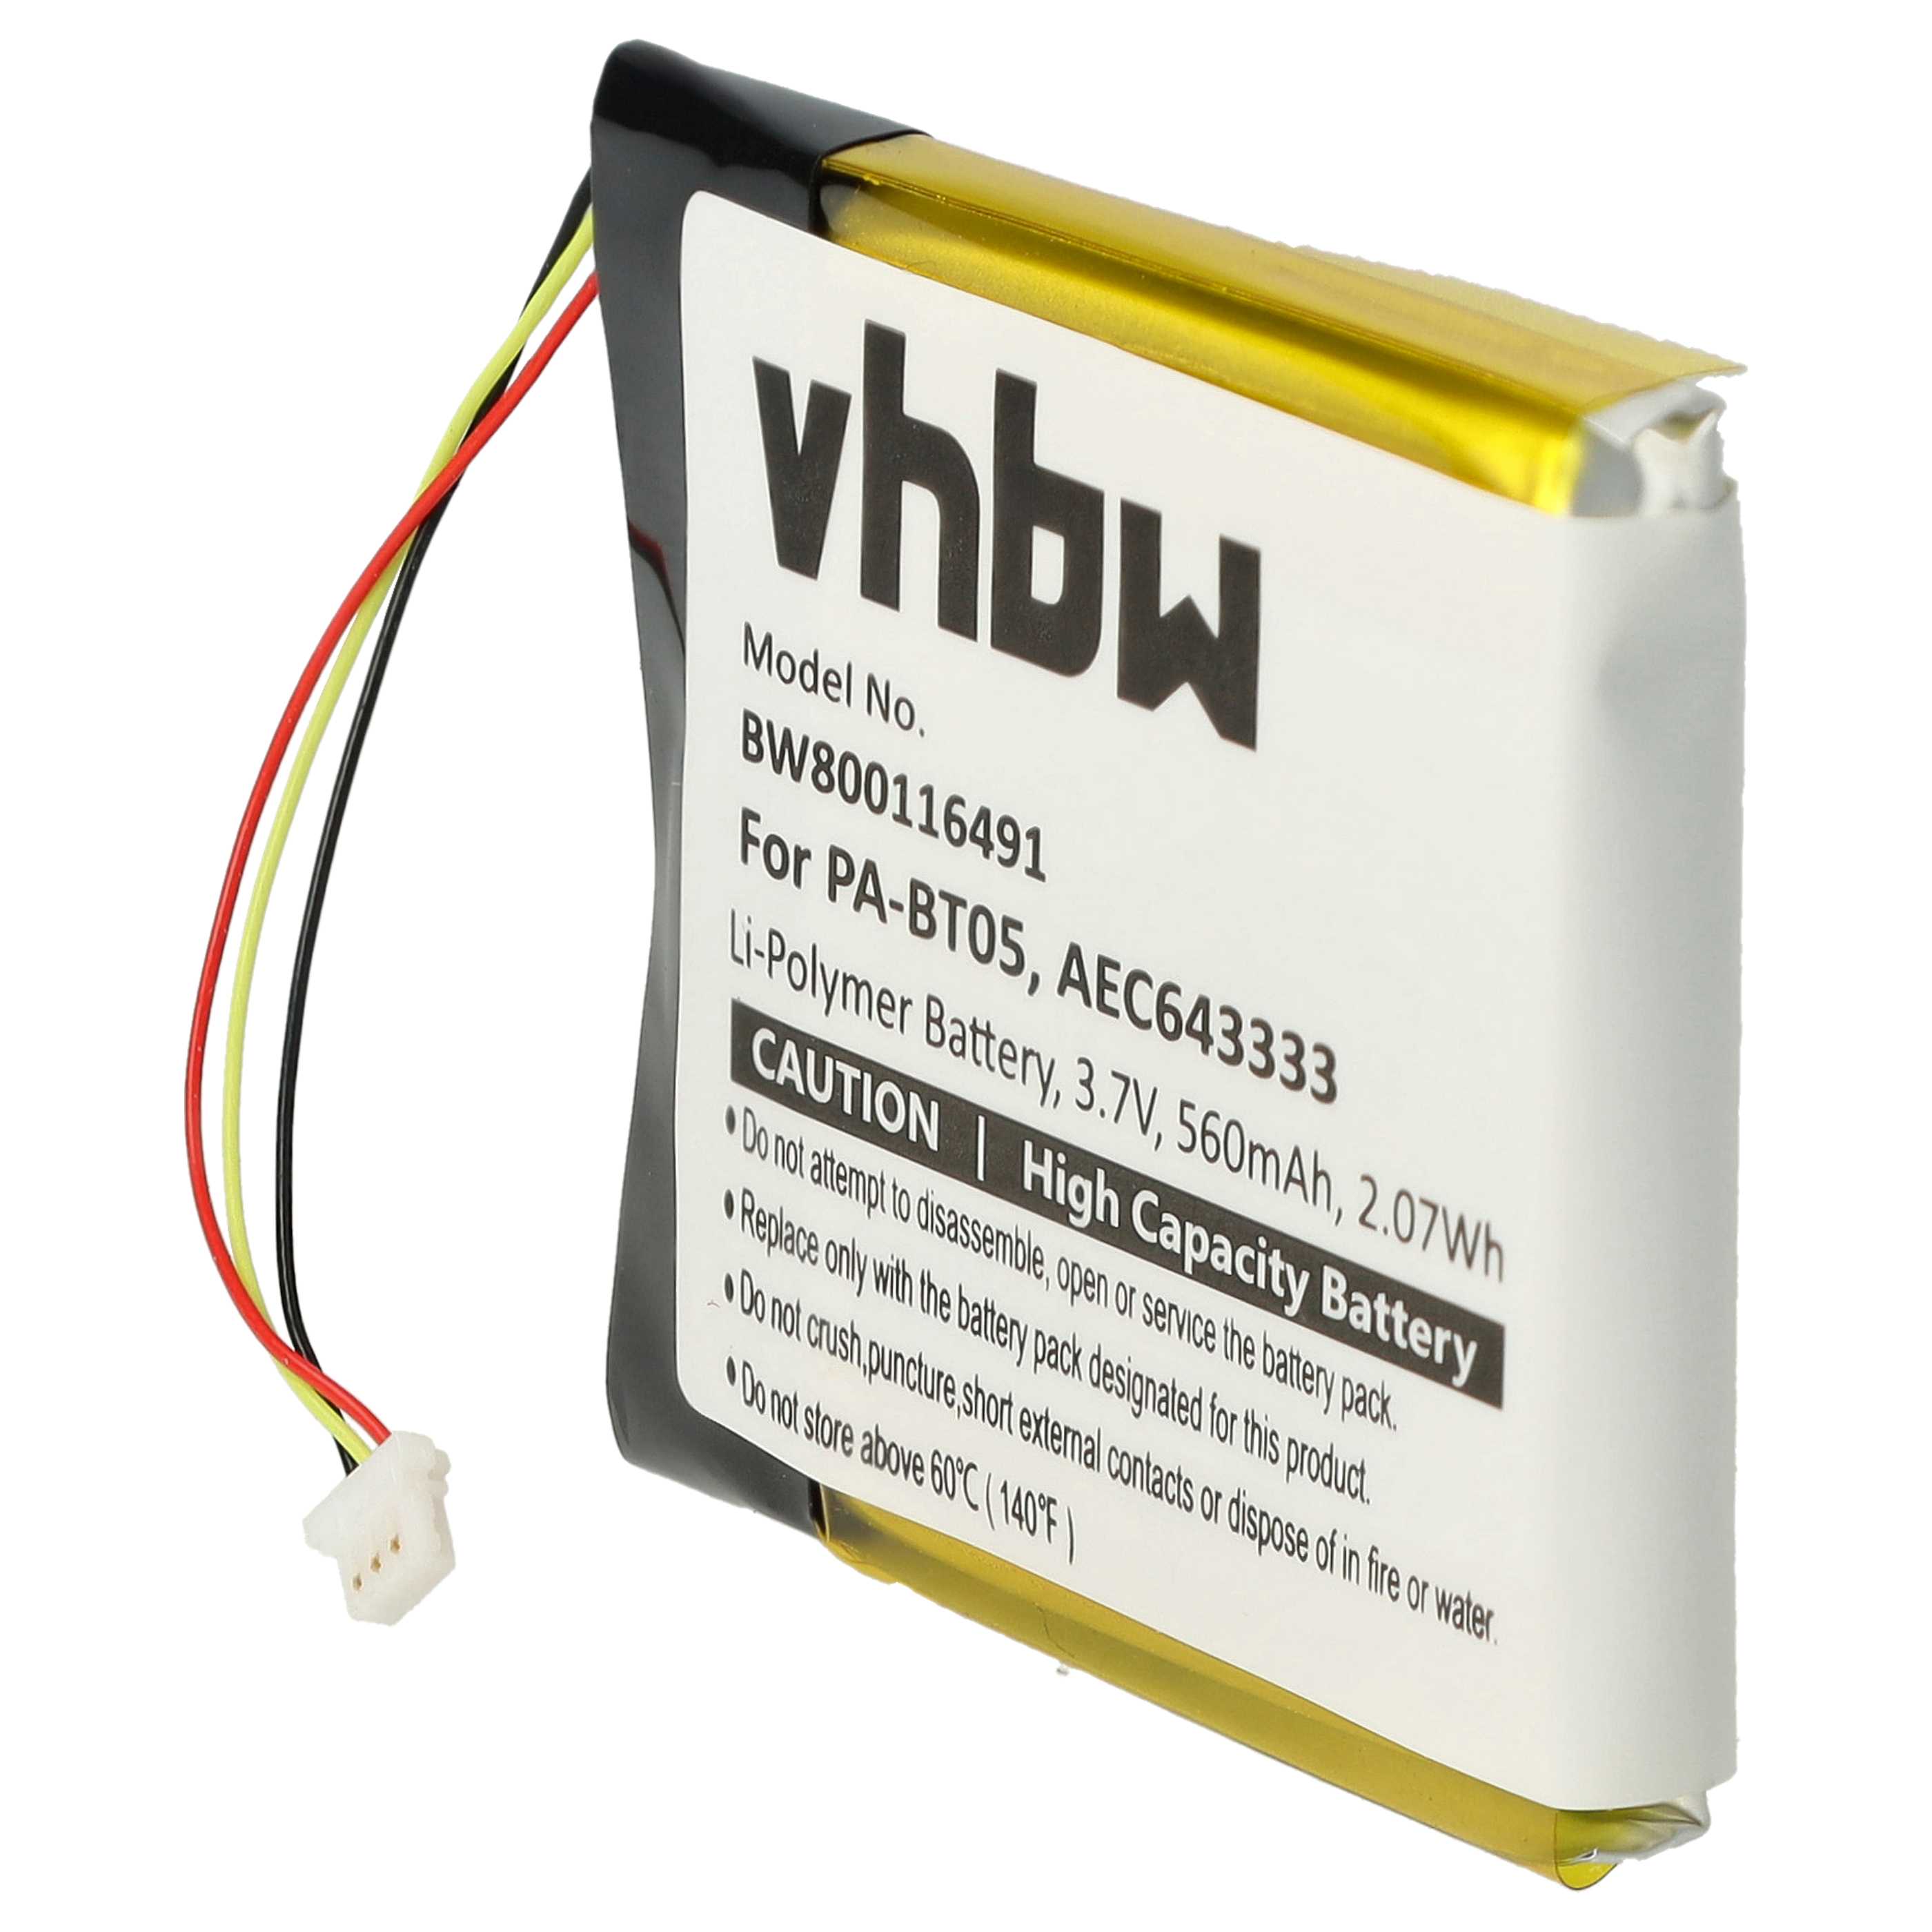 Wireless Headset Battery Replacement for Beats PA-BT05, AEC643333 - 560mAh 3.7V Li-polymer